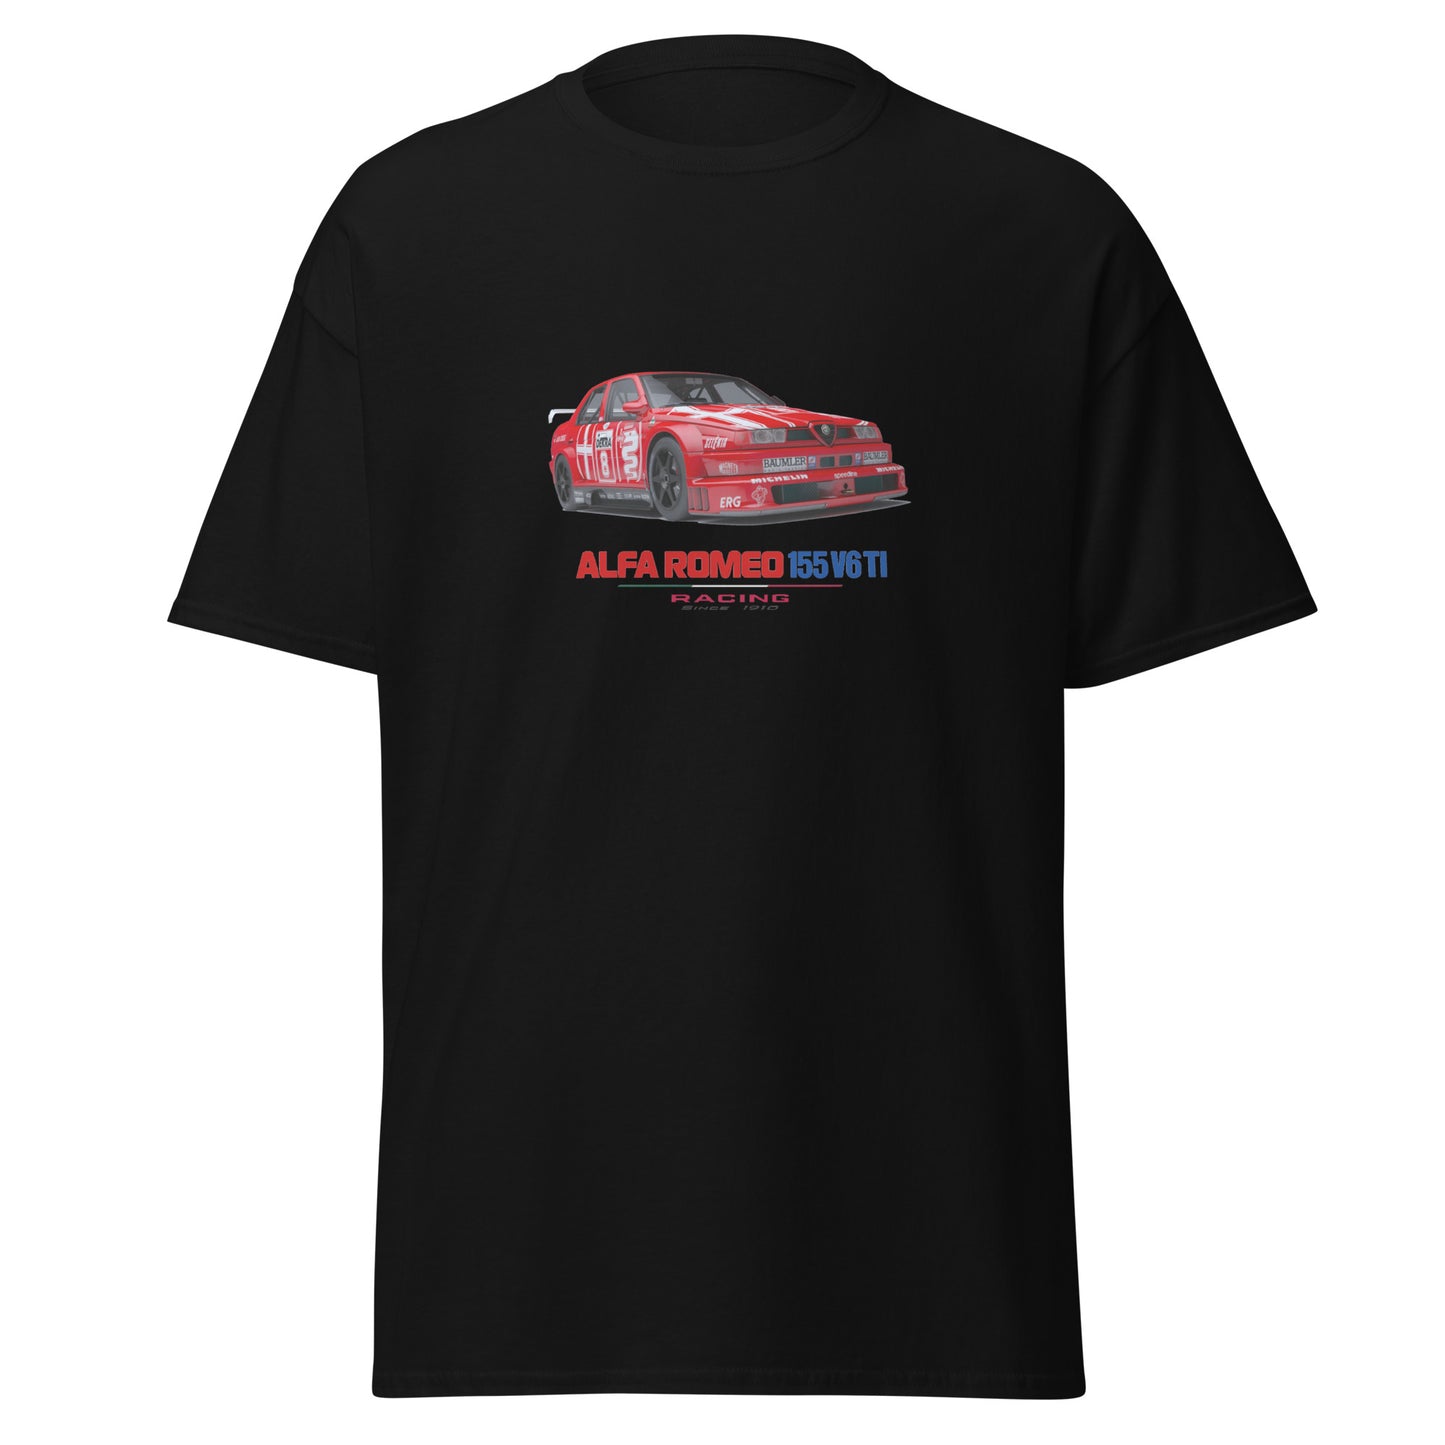 T-shirt Alfa Romeo 155 v6 dtm